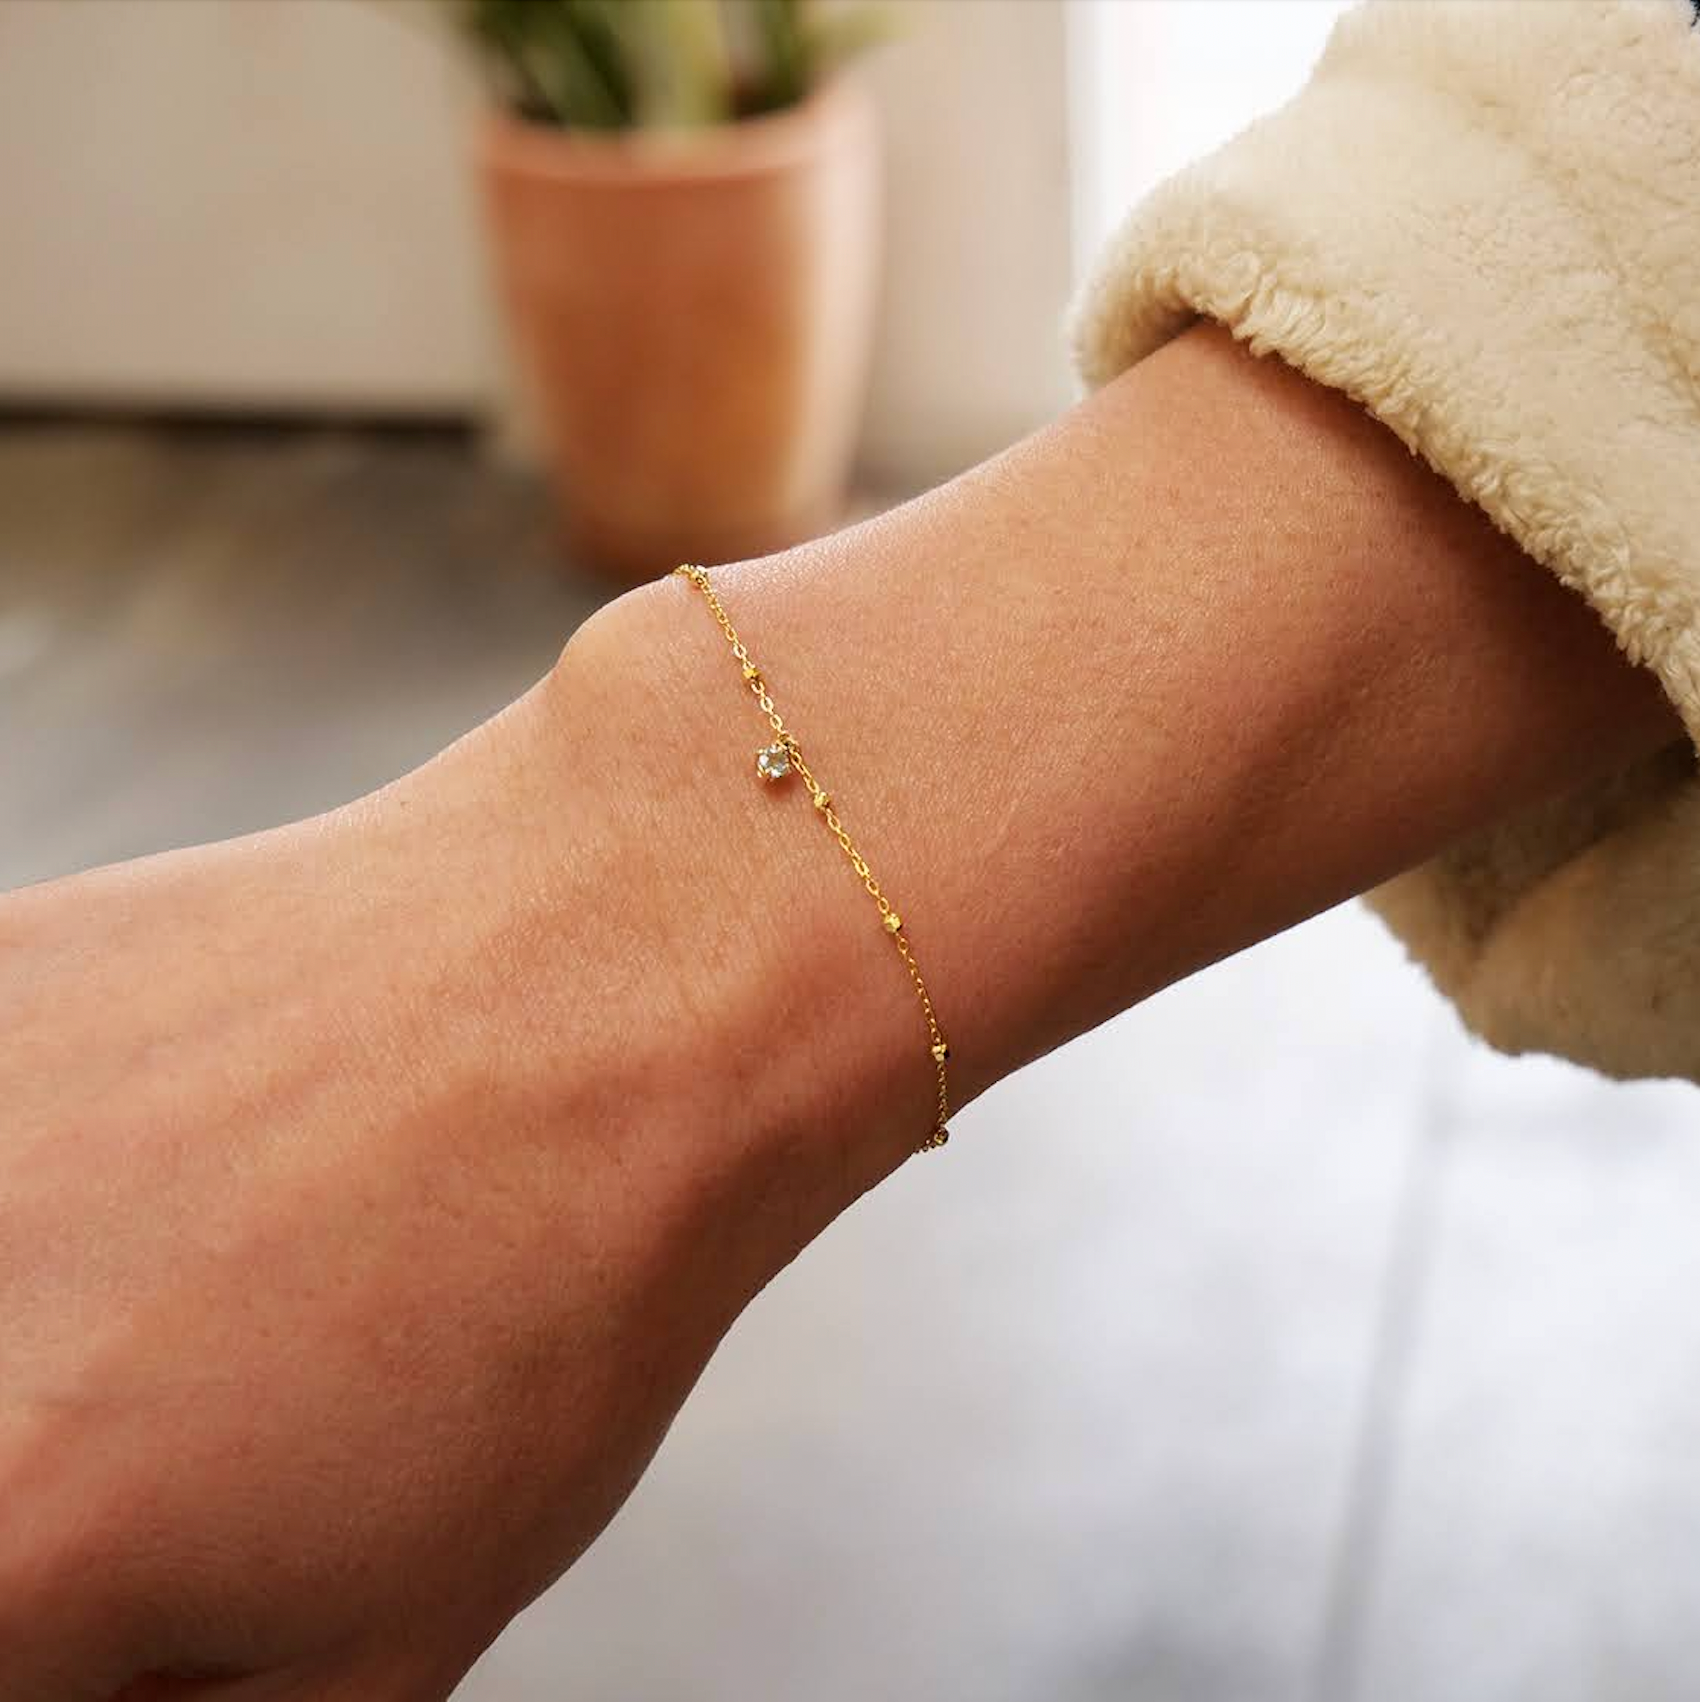 wrist with gold bracelet with charm